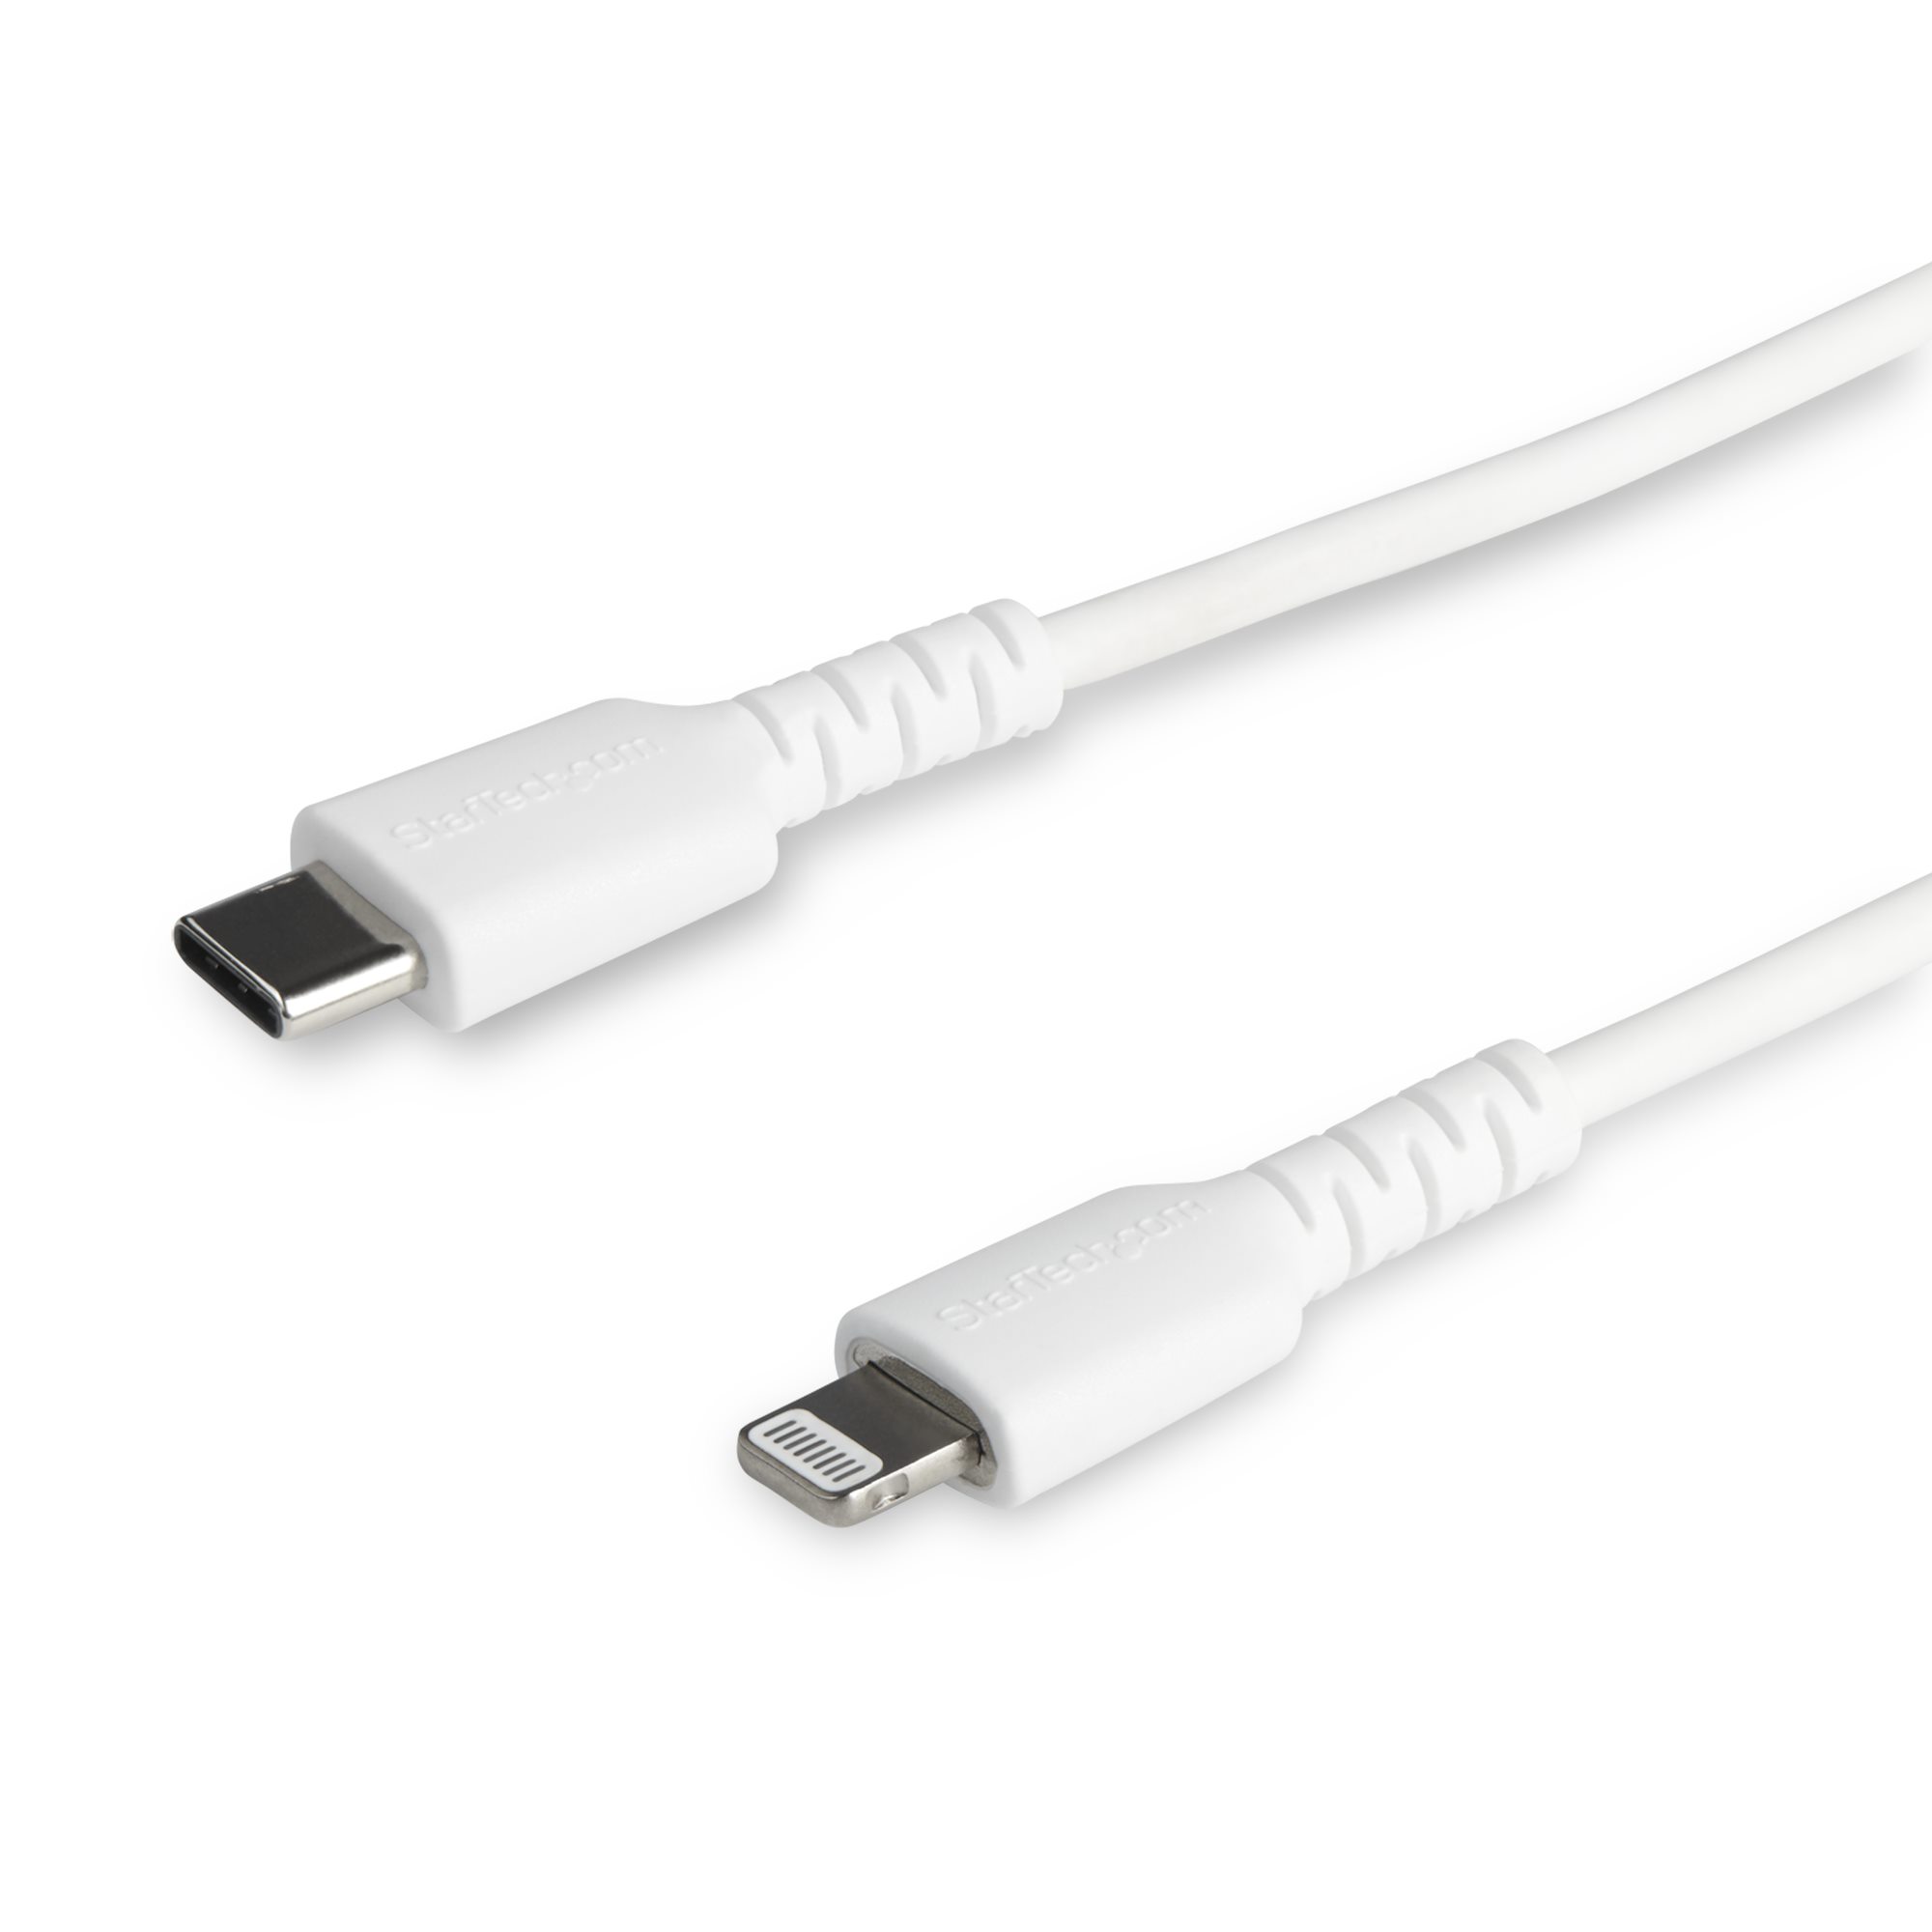 Uganda stakåndet Panter 6ft/2m Durable USB-C to Lightning Cable - Lightning Cables | StarTech.com